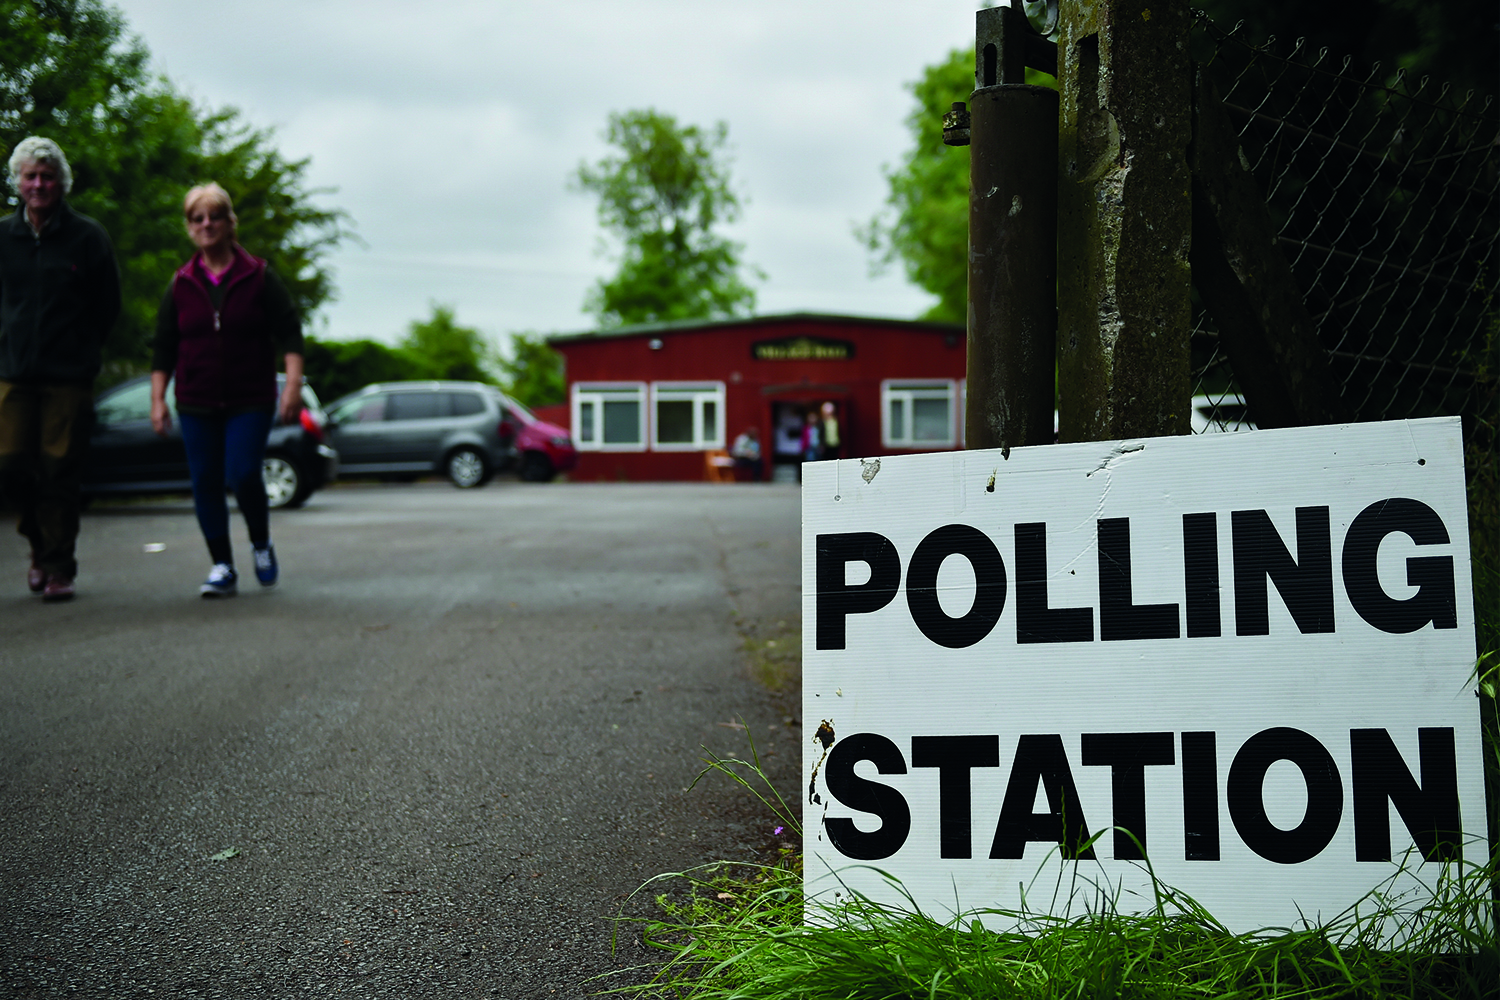 Polling station sign,